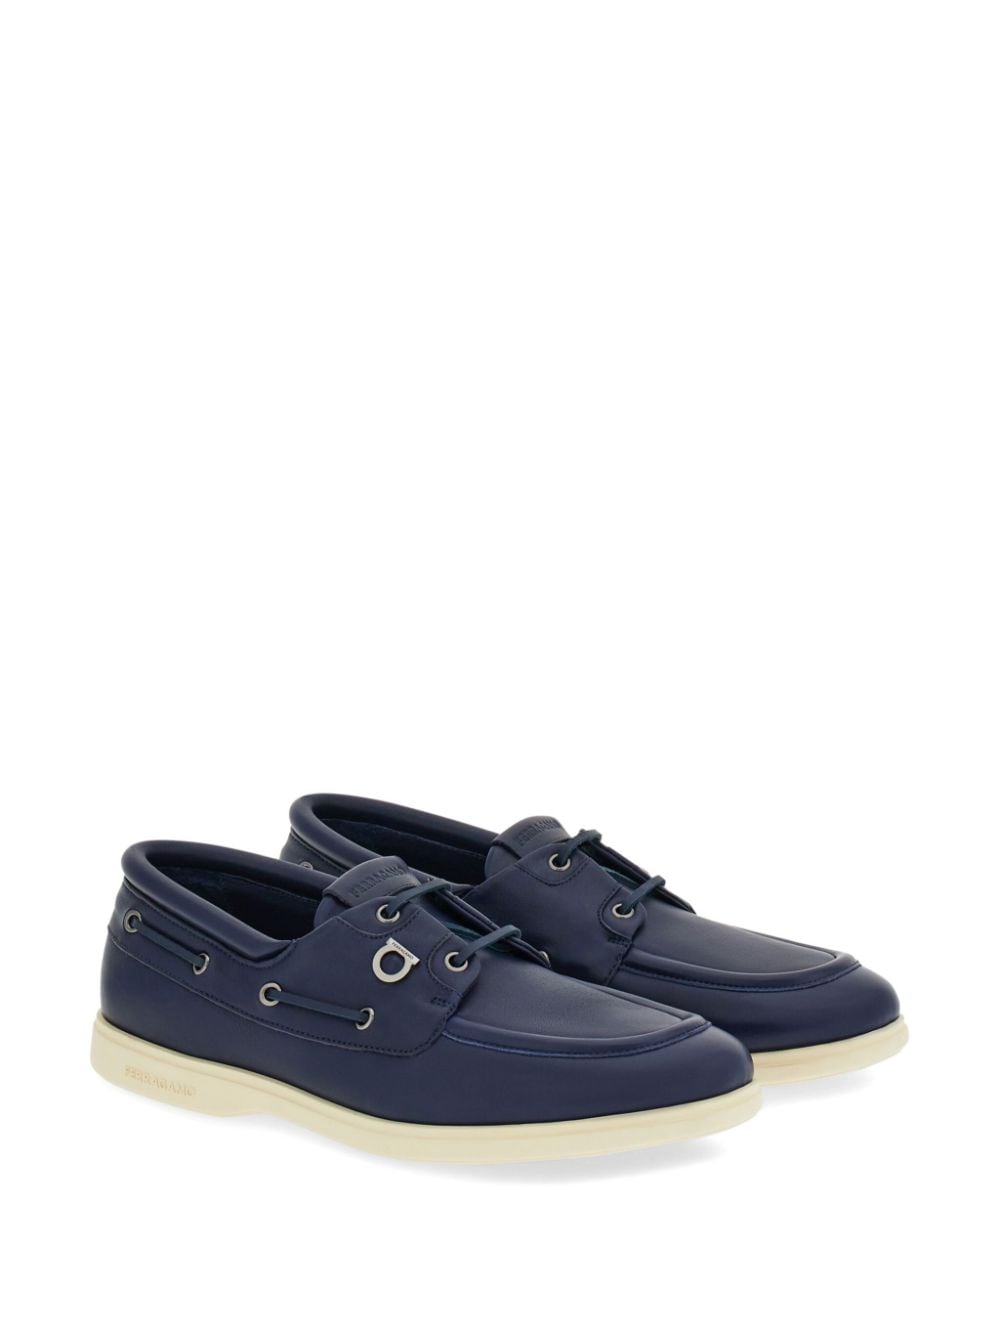 Ferragamo Gancini leather boat shoes - Blauw